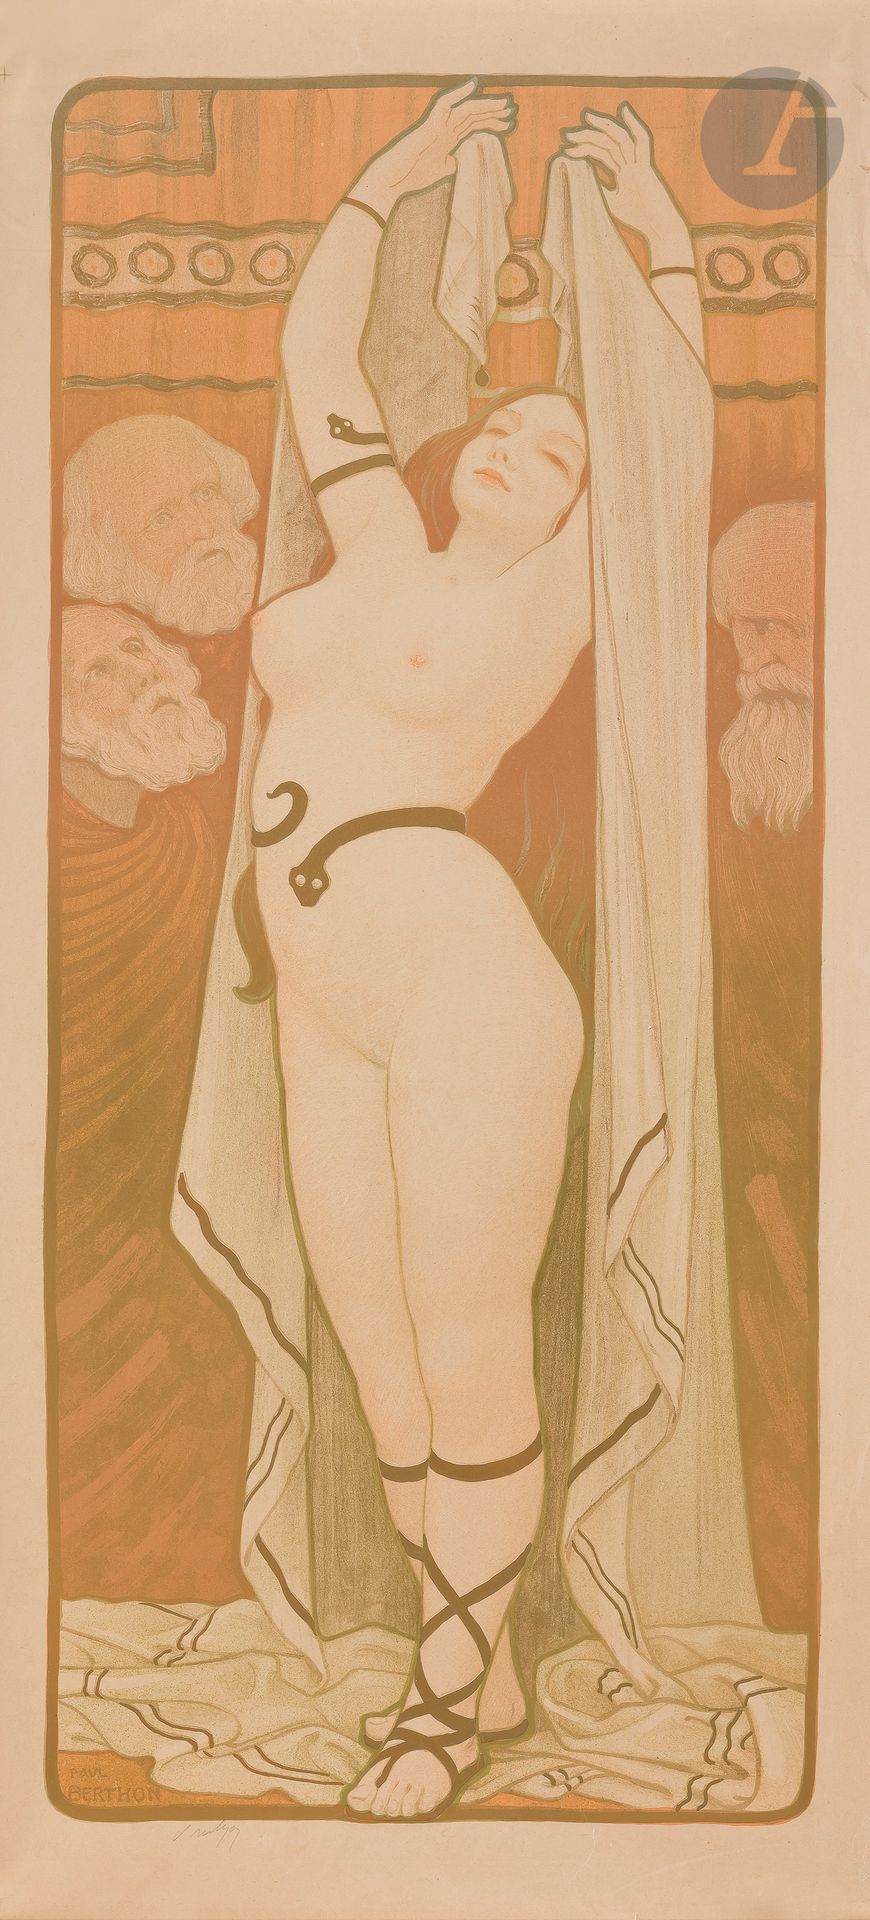 Null Paul Émile BERTHON (1872-1909
)Phryne, 1898铬版画
。不在画布上。
 
左下方有签名
。

状况良好，
87&hellip;